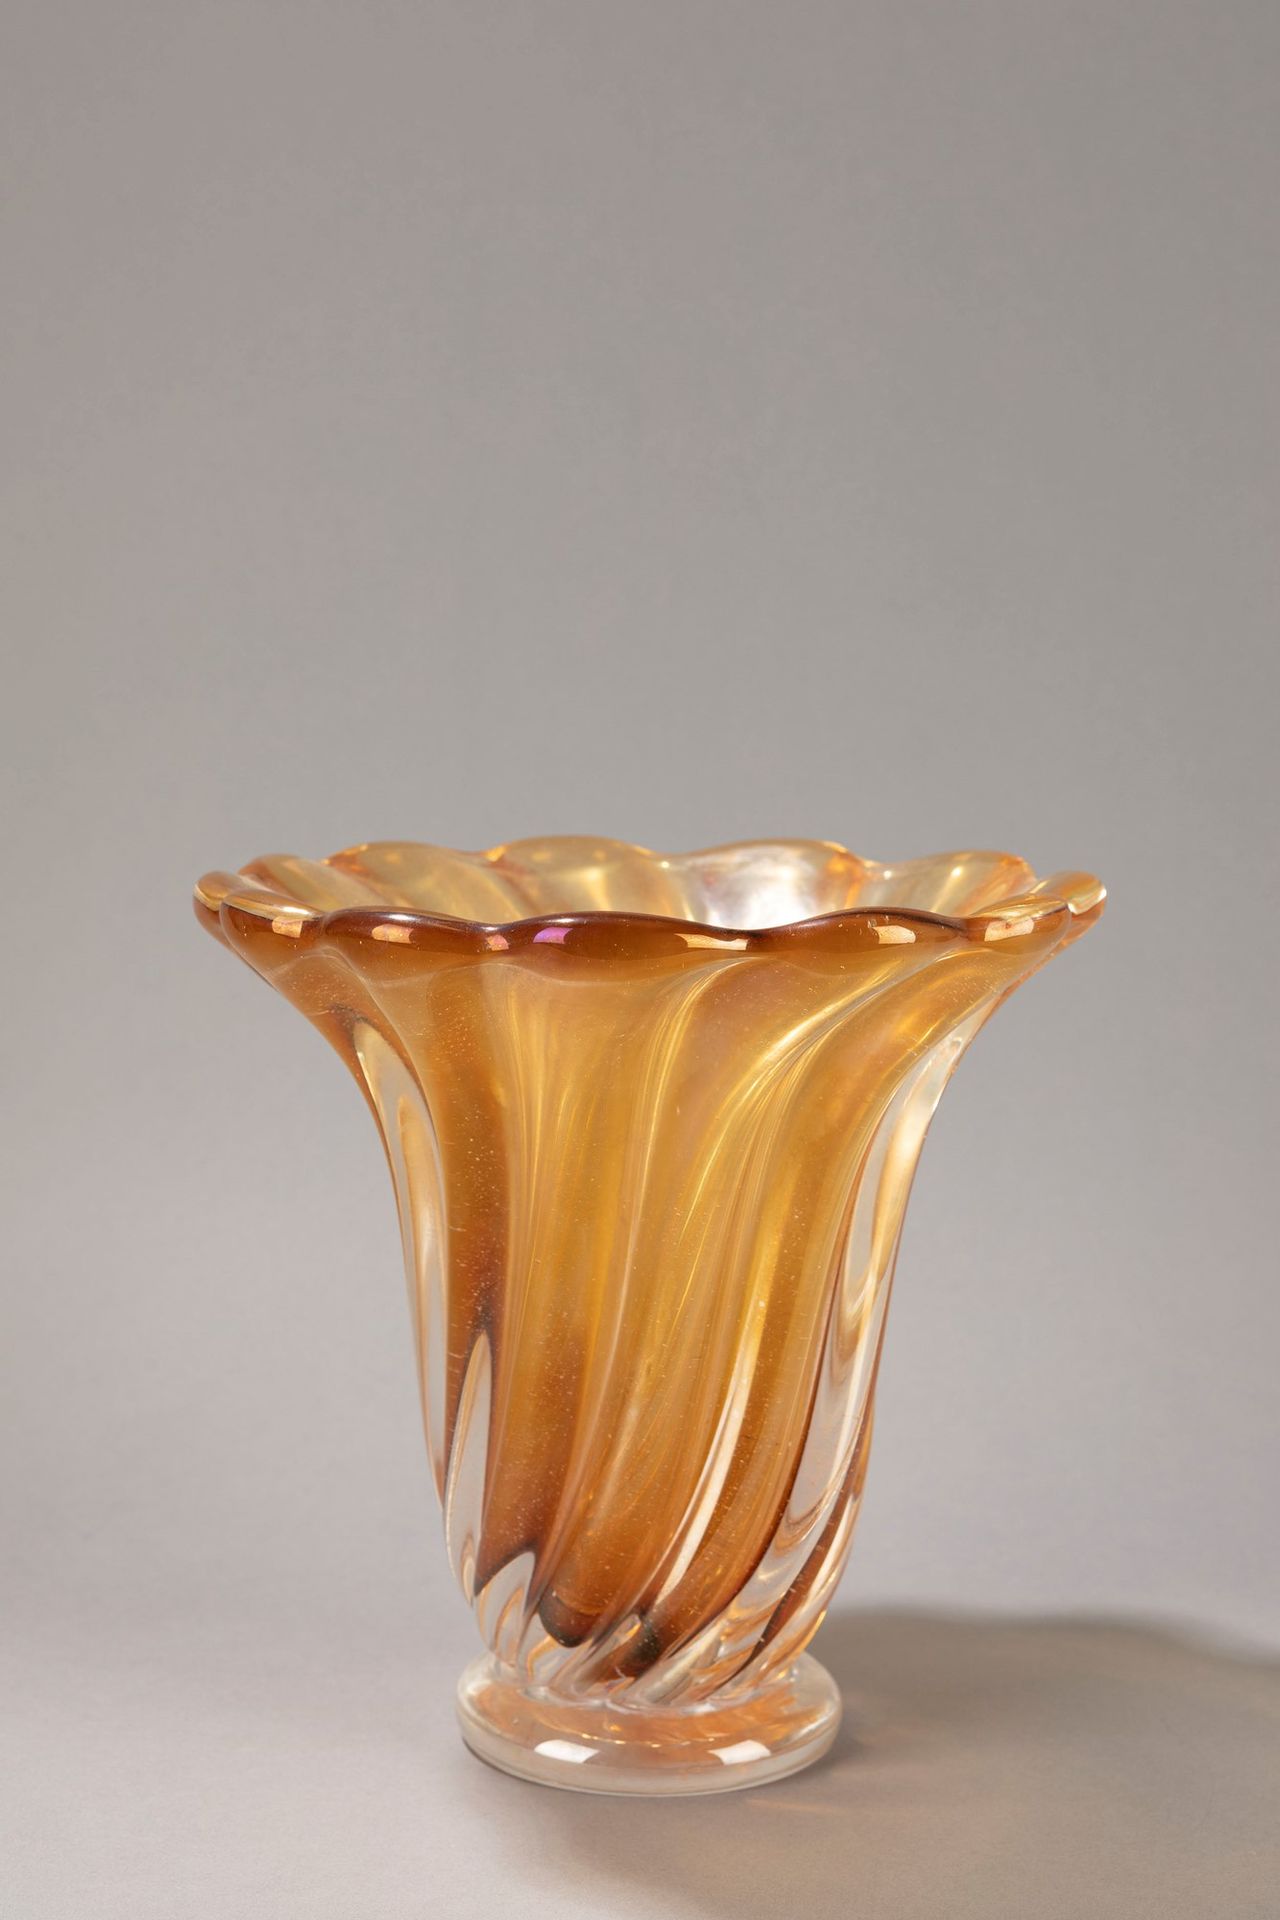 SEGUSO Vase, 1950 ca.

H 24 x 22 cm 
sommerso glass, amber iridescent colour.